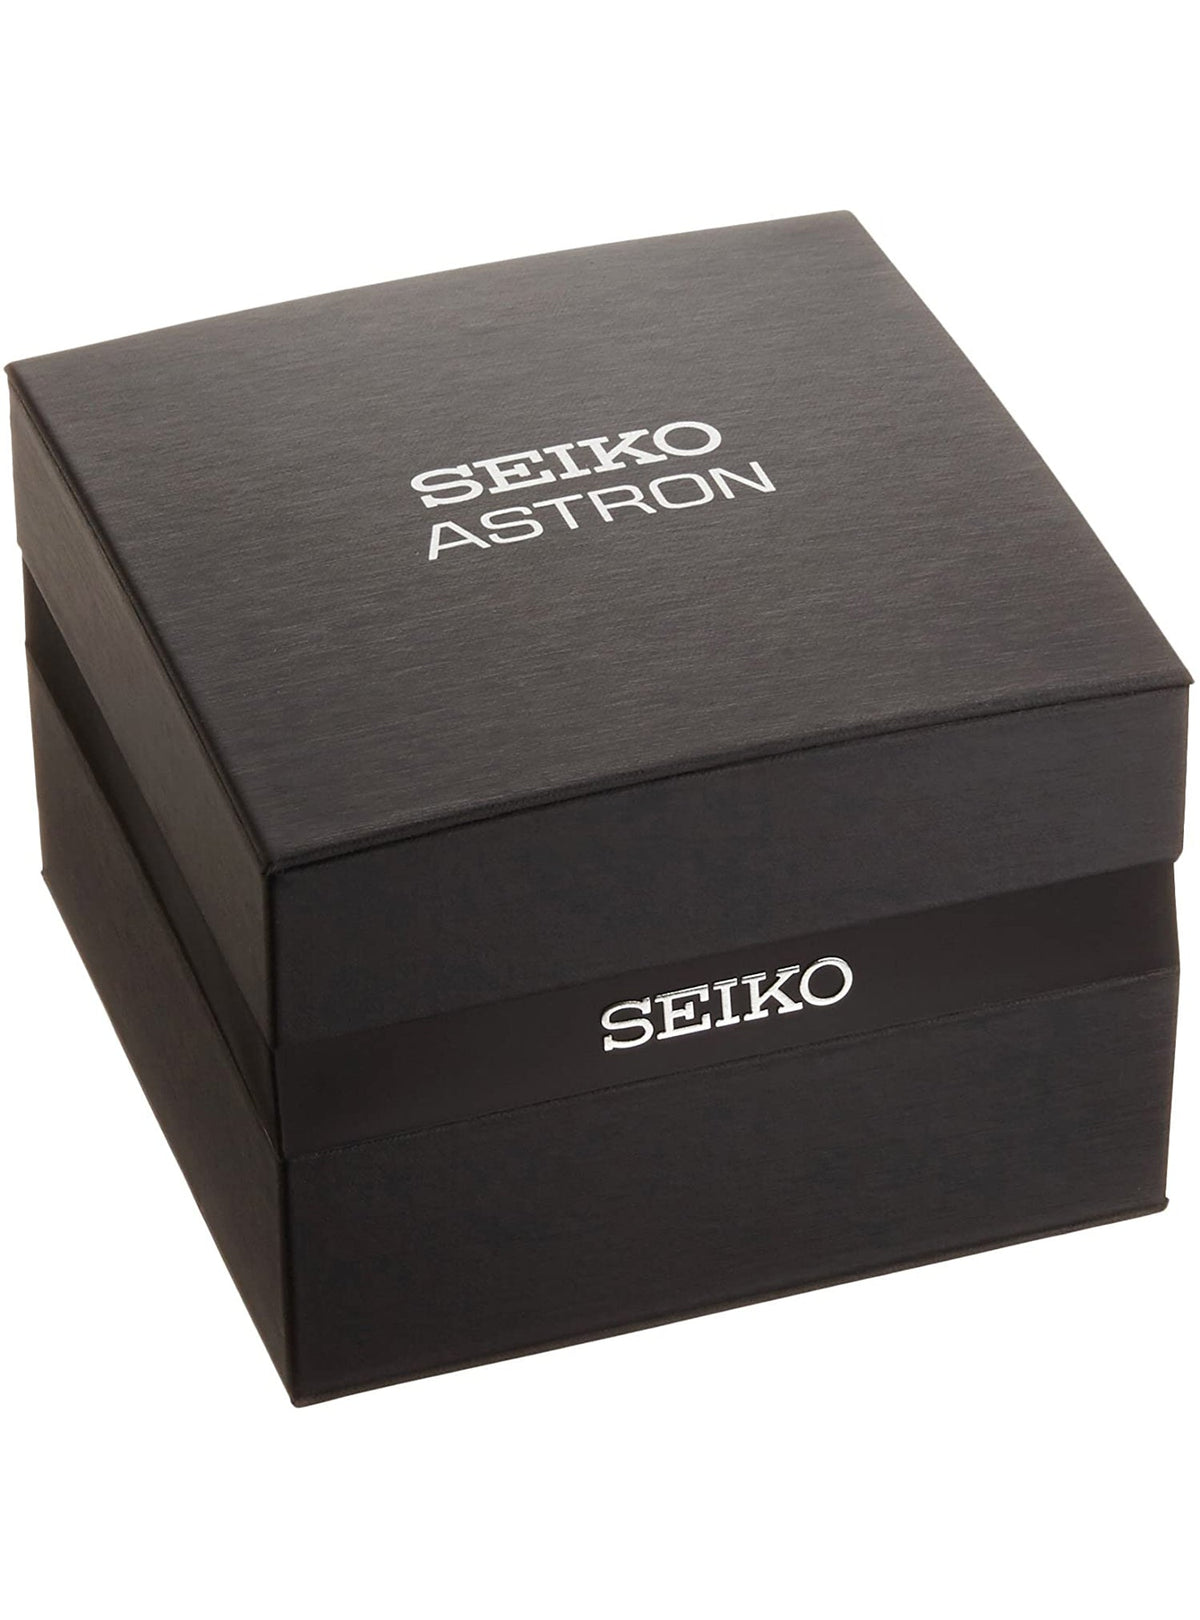 SEIKO ASTRON SBXB087 MADE IN JAPAN JDMWRISTWATCHjapan-select